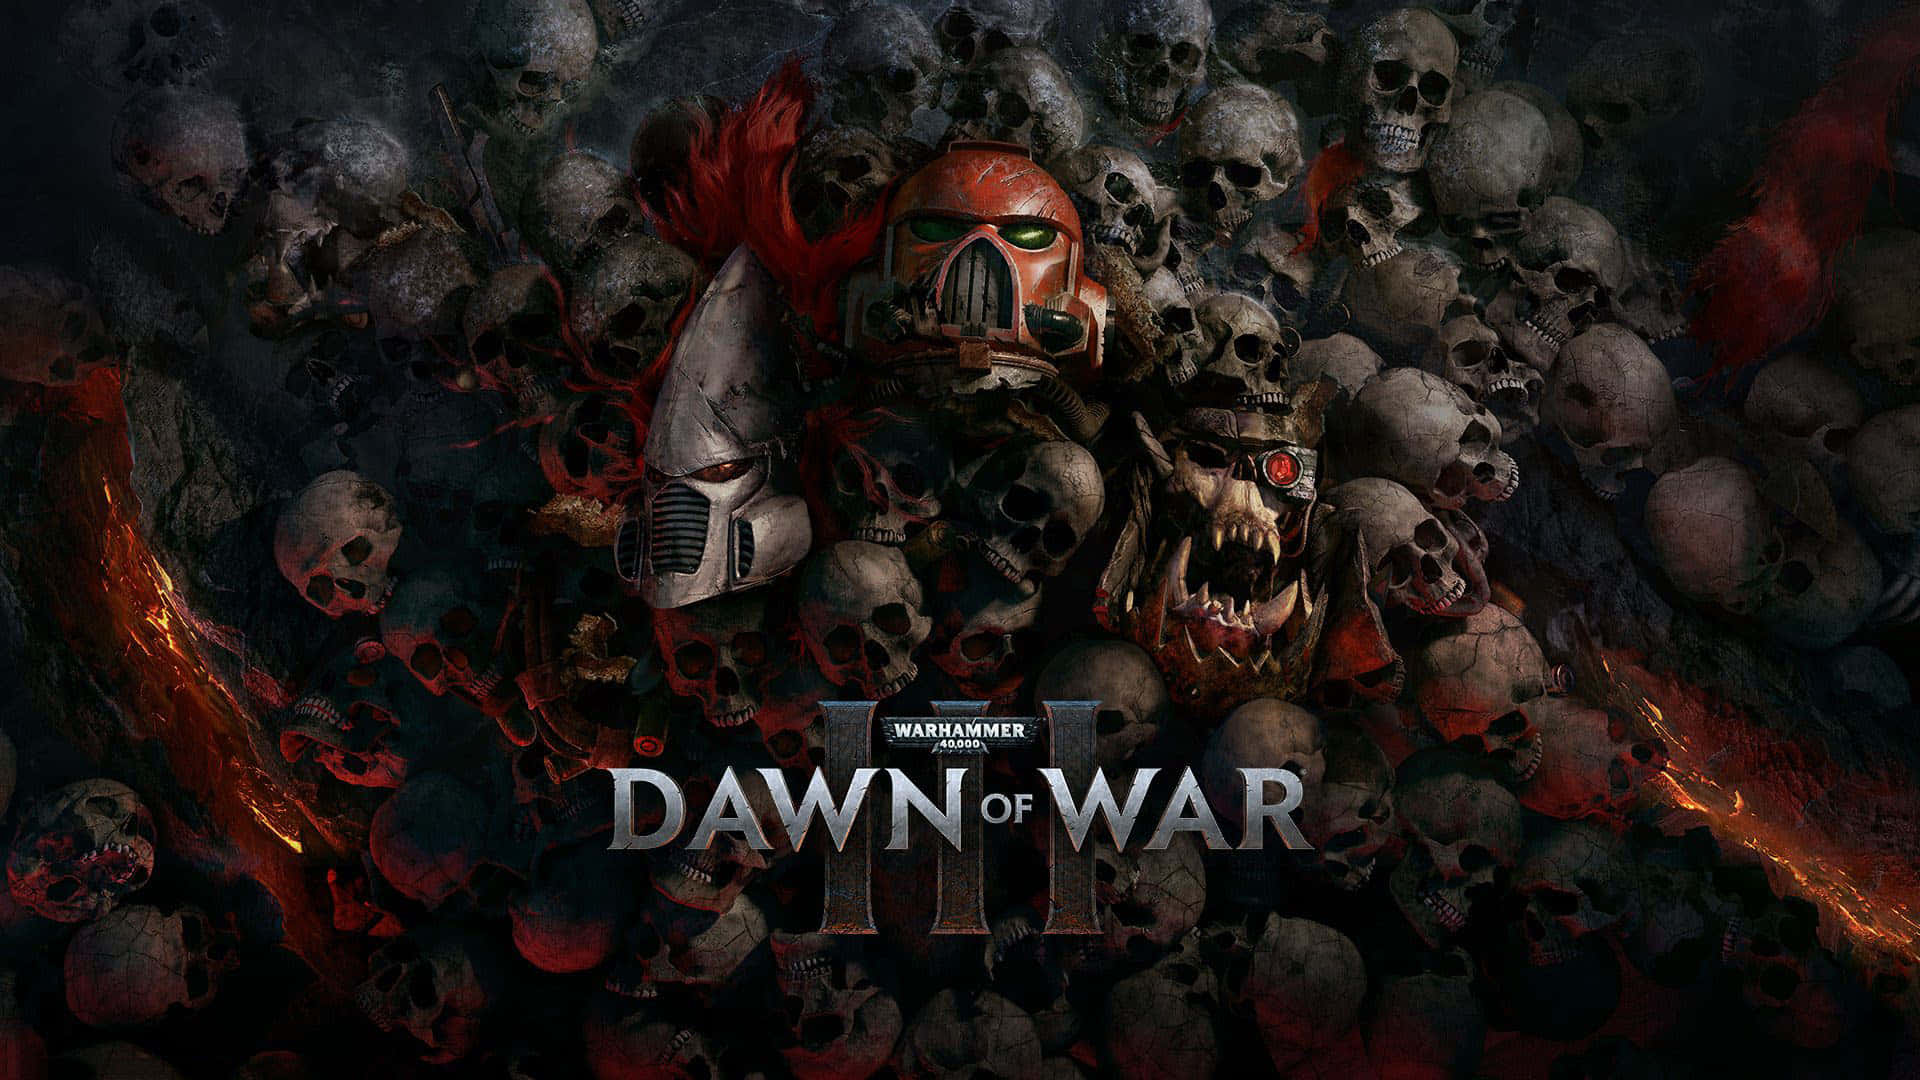 Captivating Dawn of War III High-Resolution Image